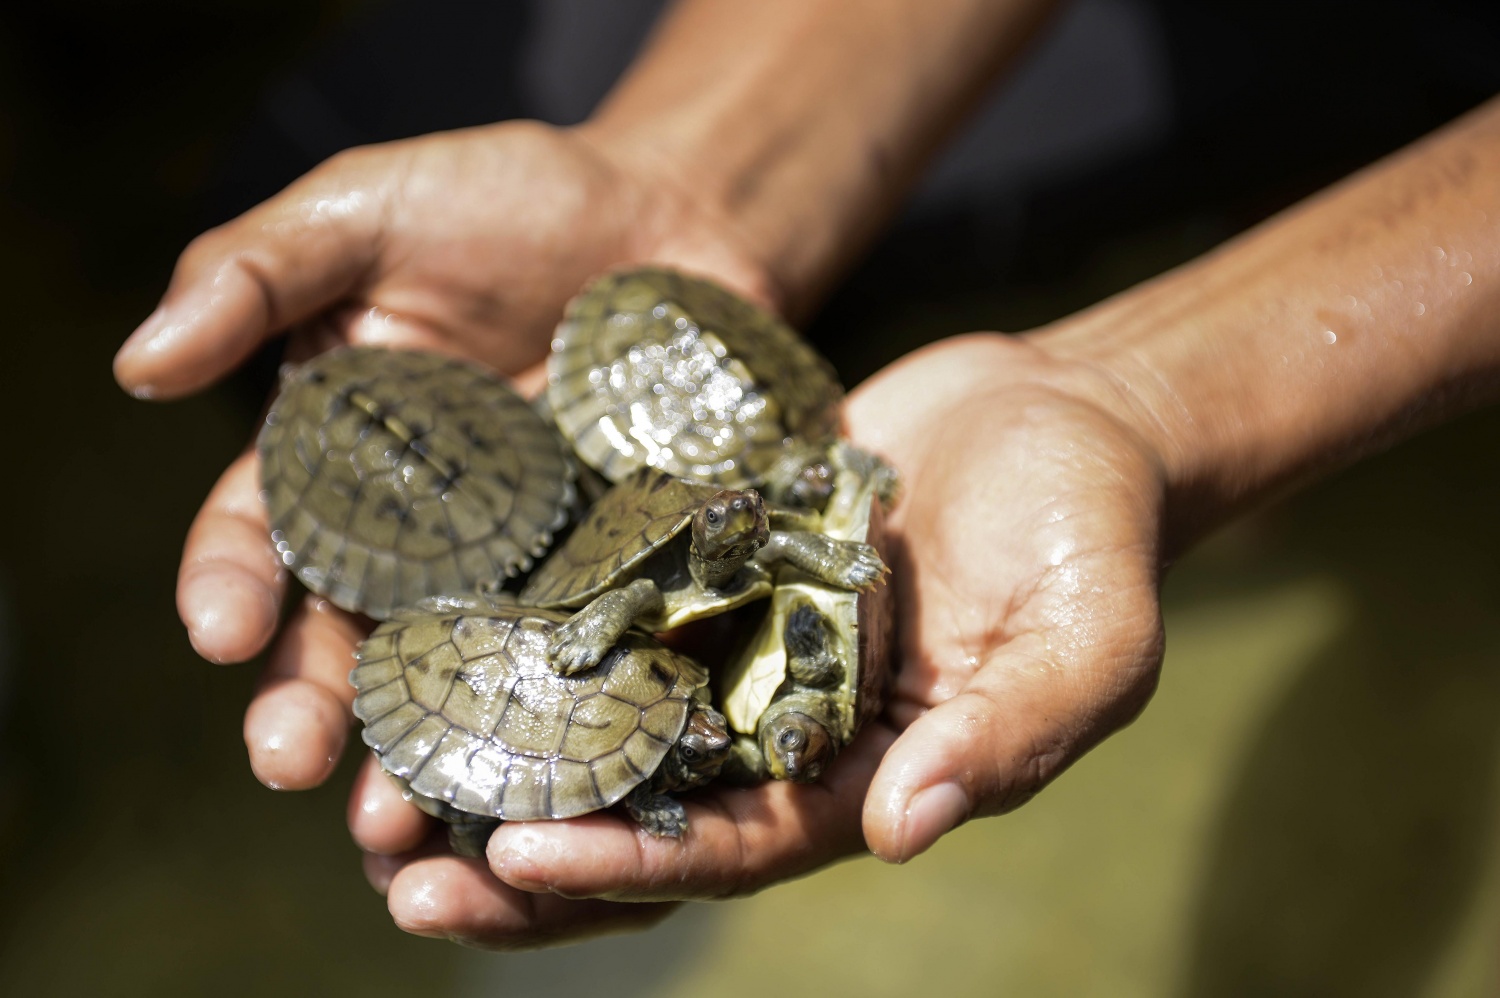 Turtle Hatchlings